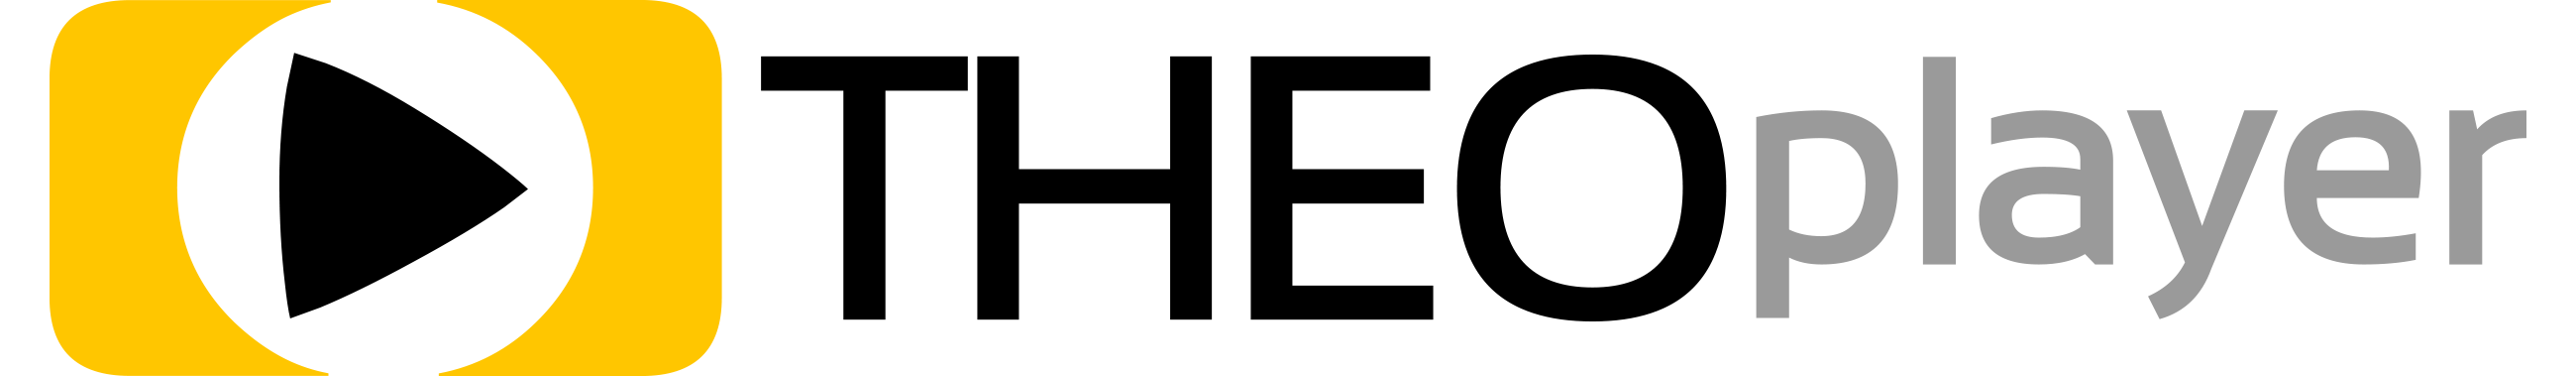 THEOplayer logo mail horizontal